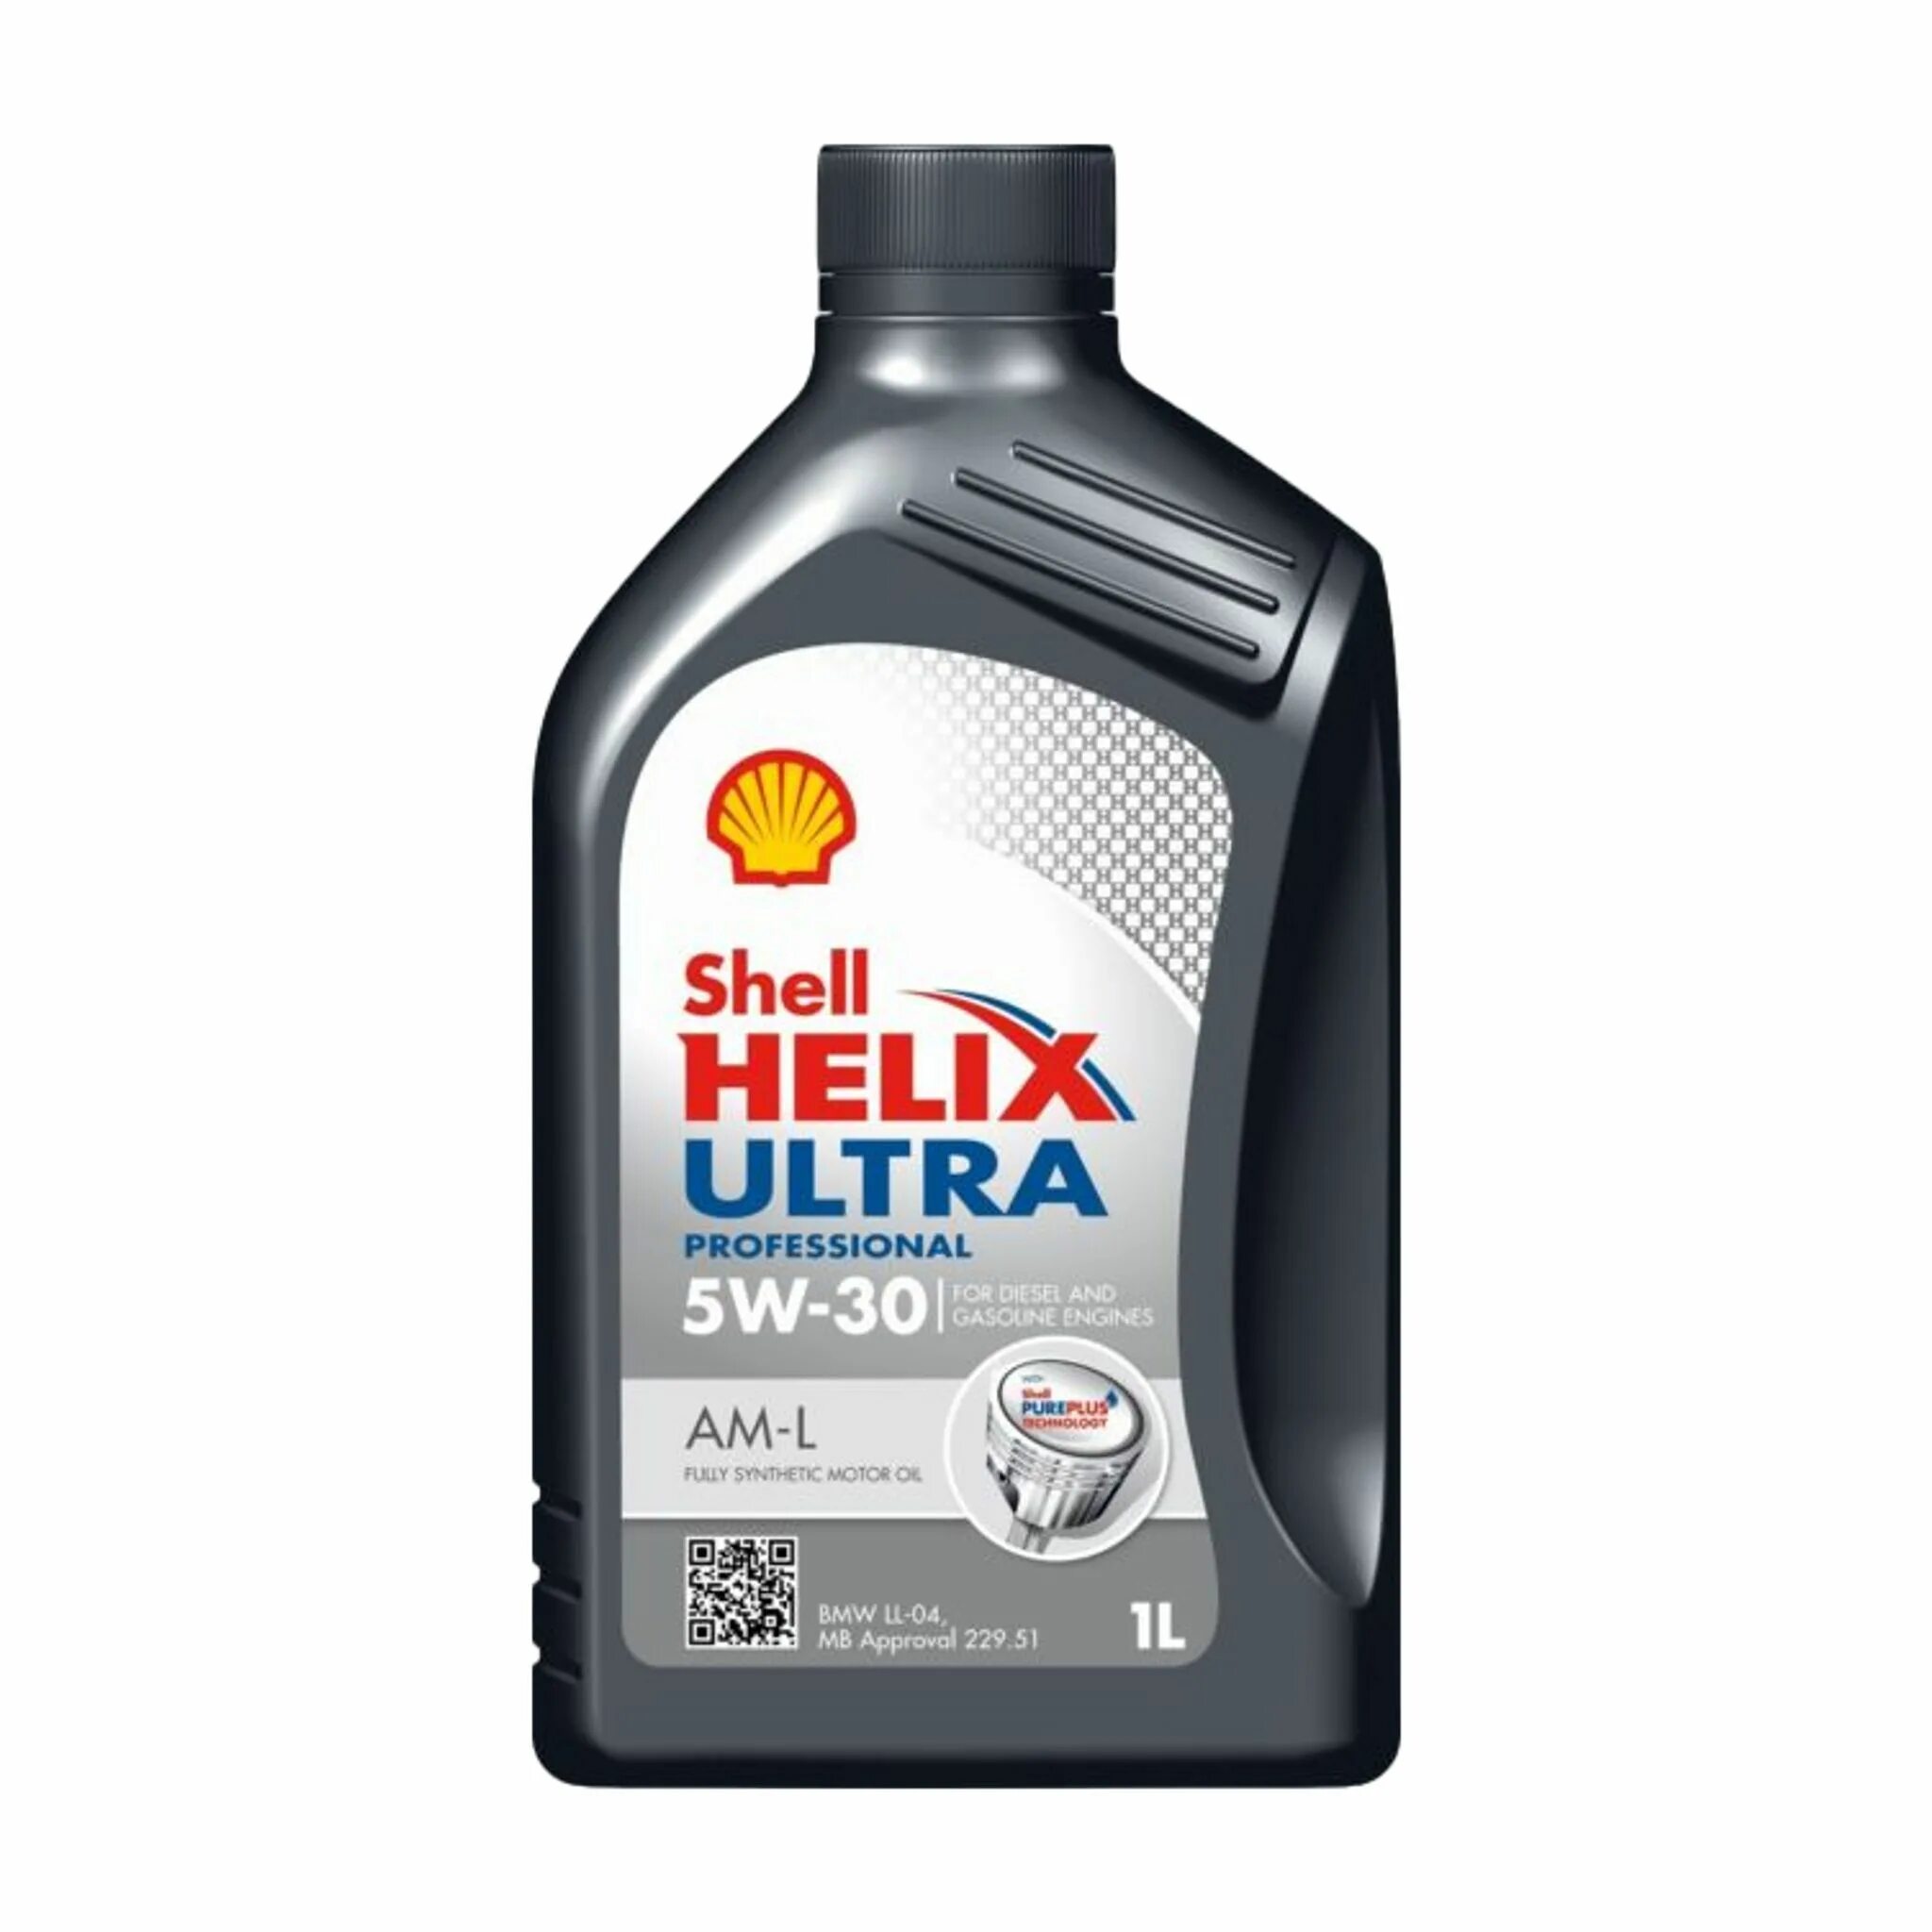 Shell Helix Ultra 5w20. Shell Ultra 0w20. Shell 0w20 SN. Shell Helix Ultra professional af 5w-20.